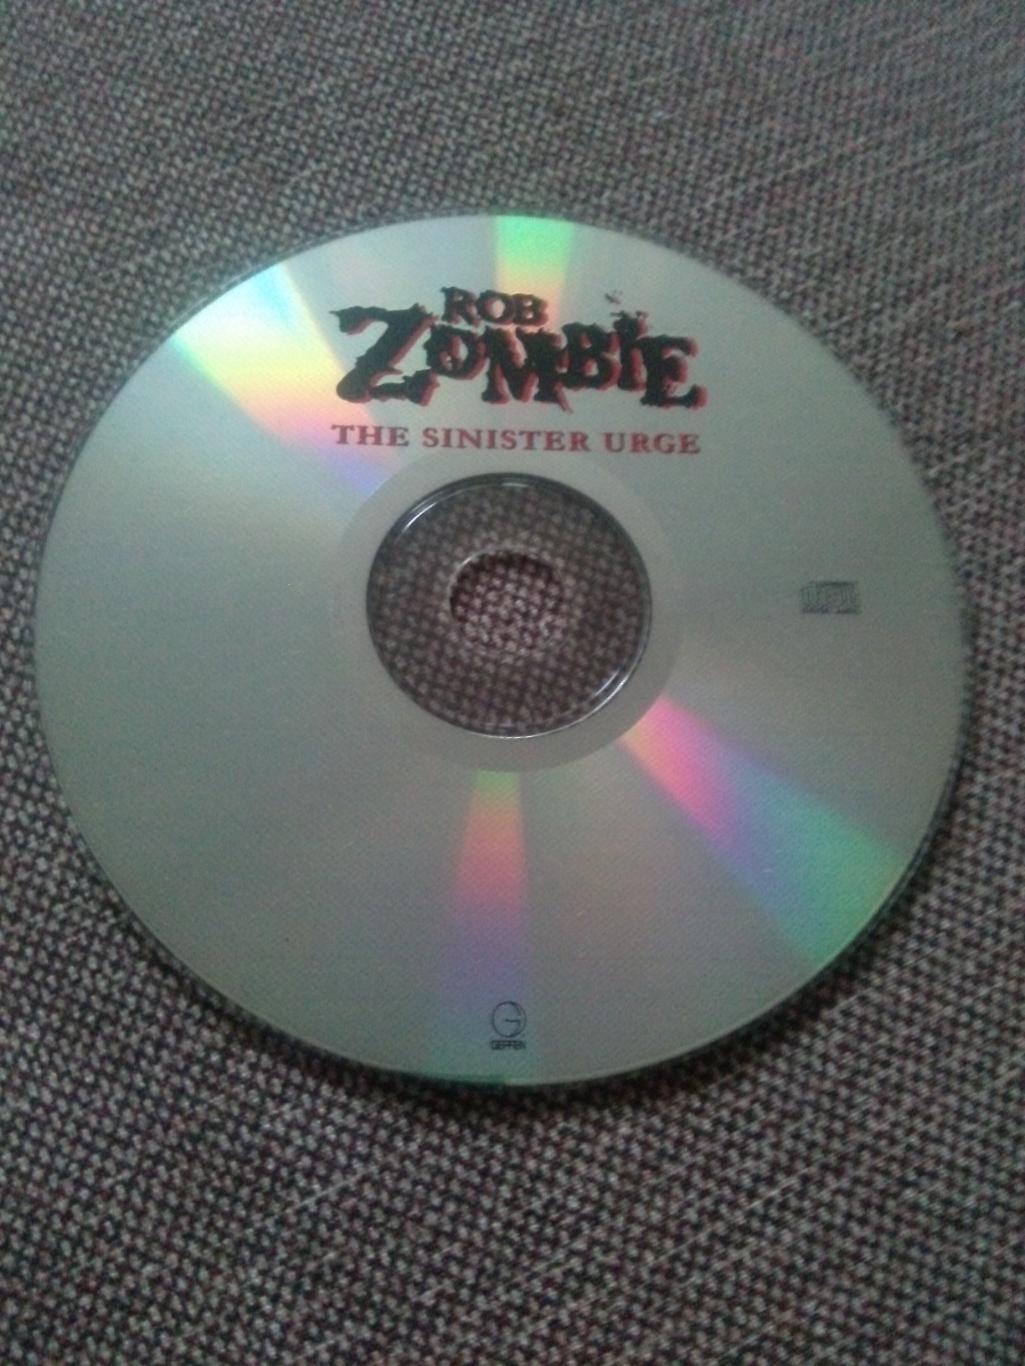 ГруппаRob Zombie-The Sinister Urge(студийный альбом 2001 г.) Рок 4